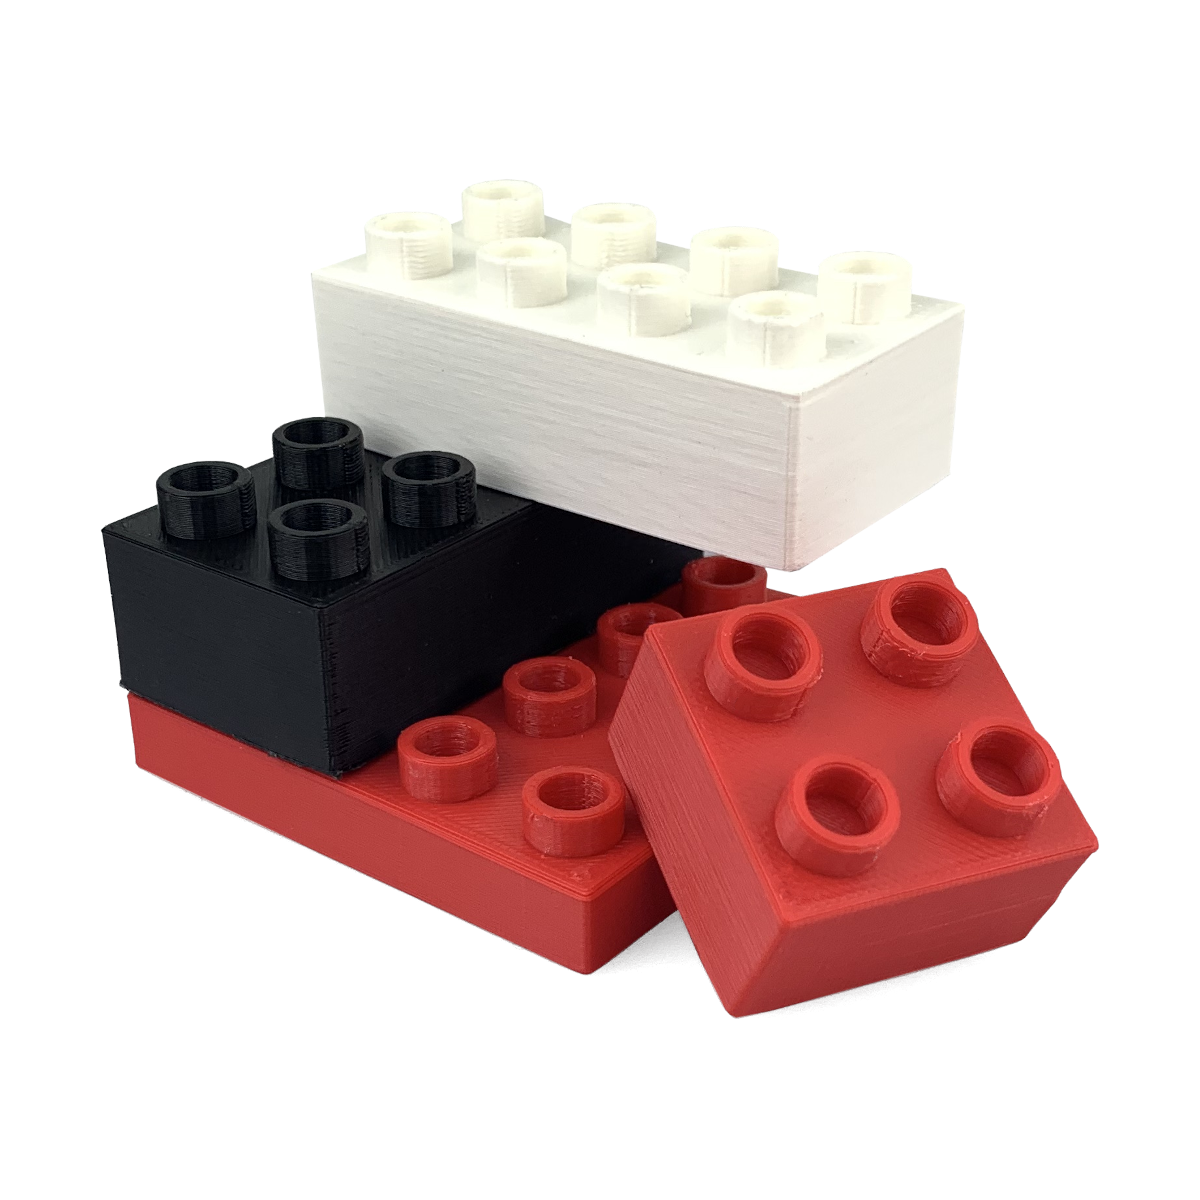 Fiberlogy ABS PLUS 3D printing filament example print legos red white black